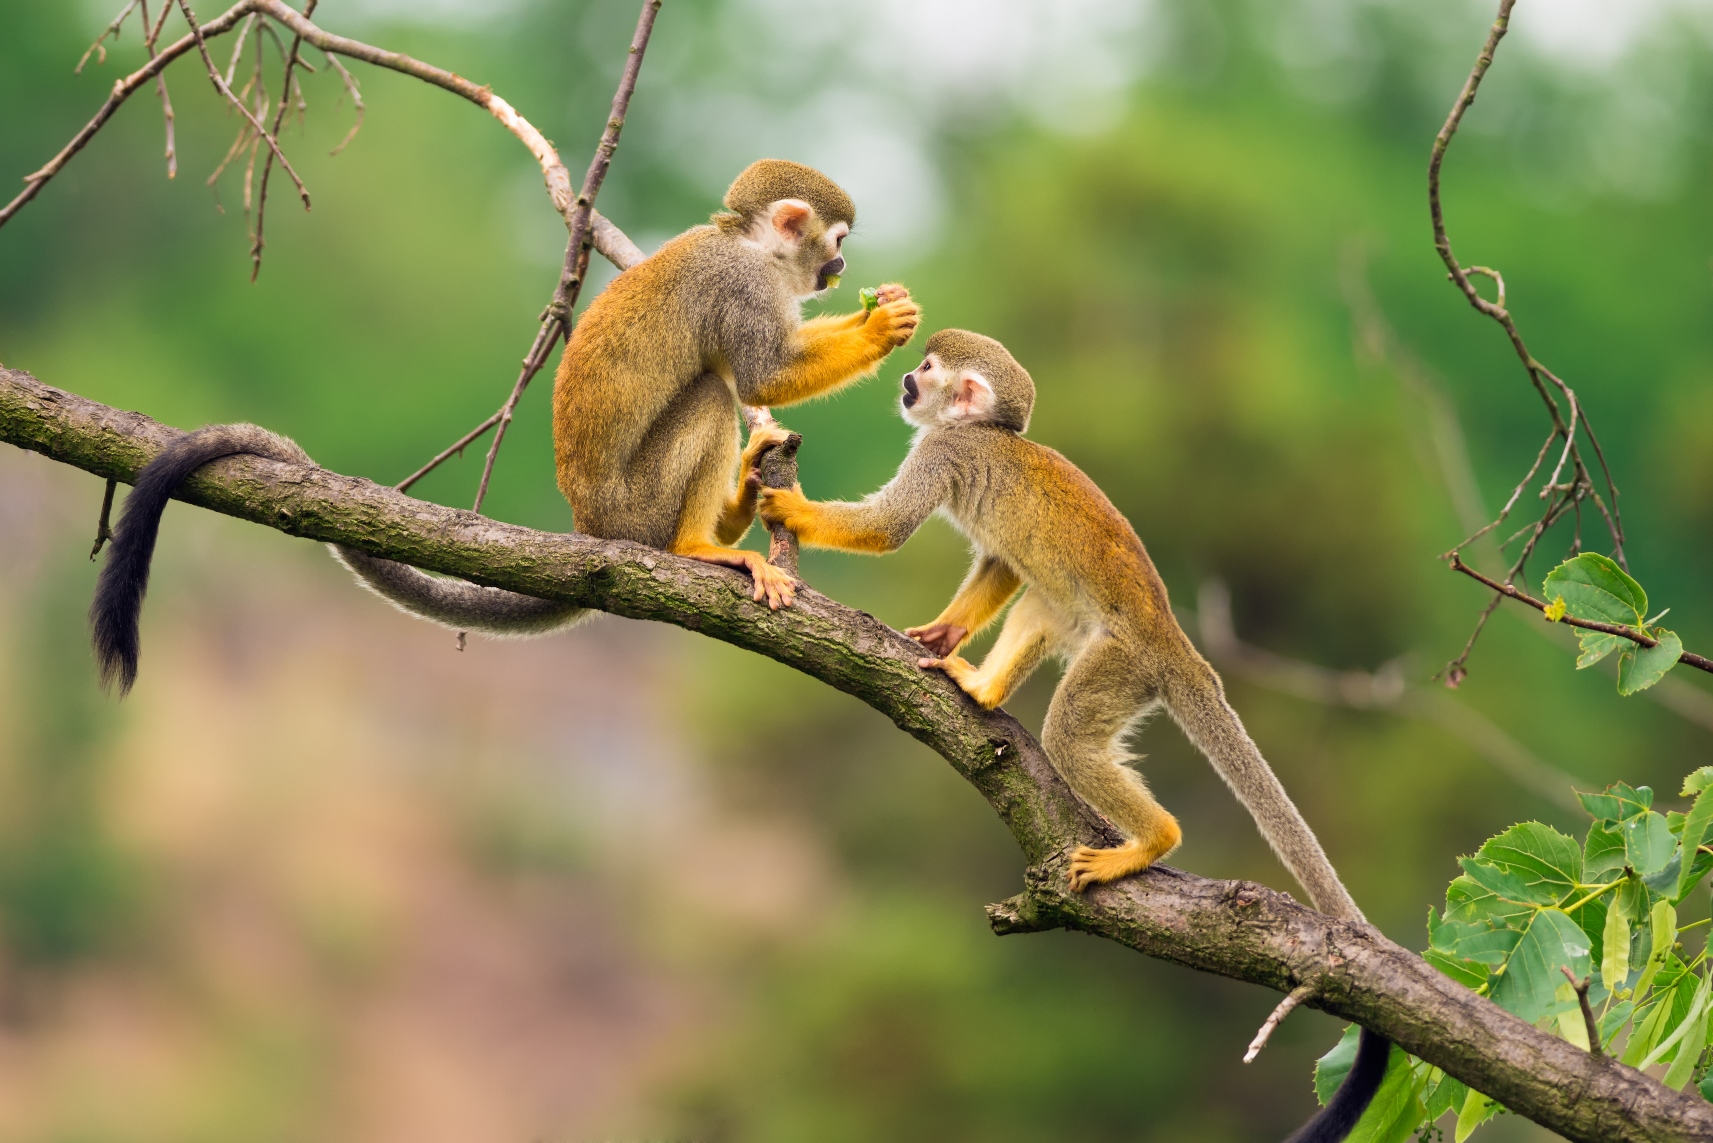 Monkeys in Peruvian Amazon